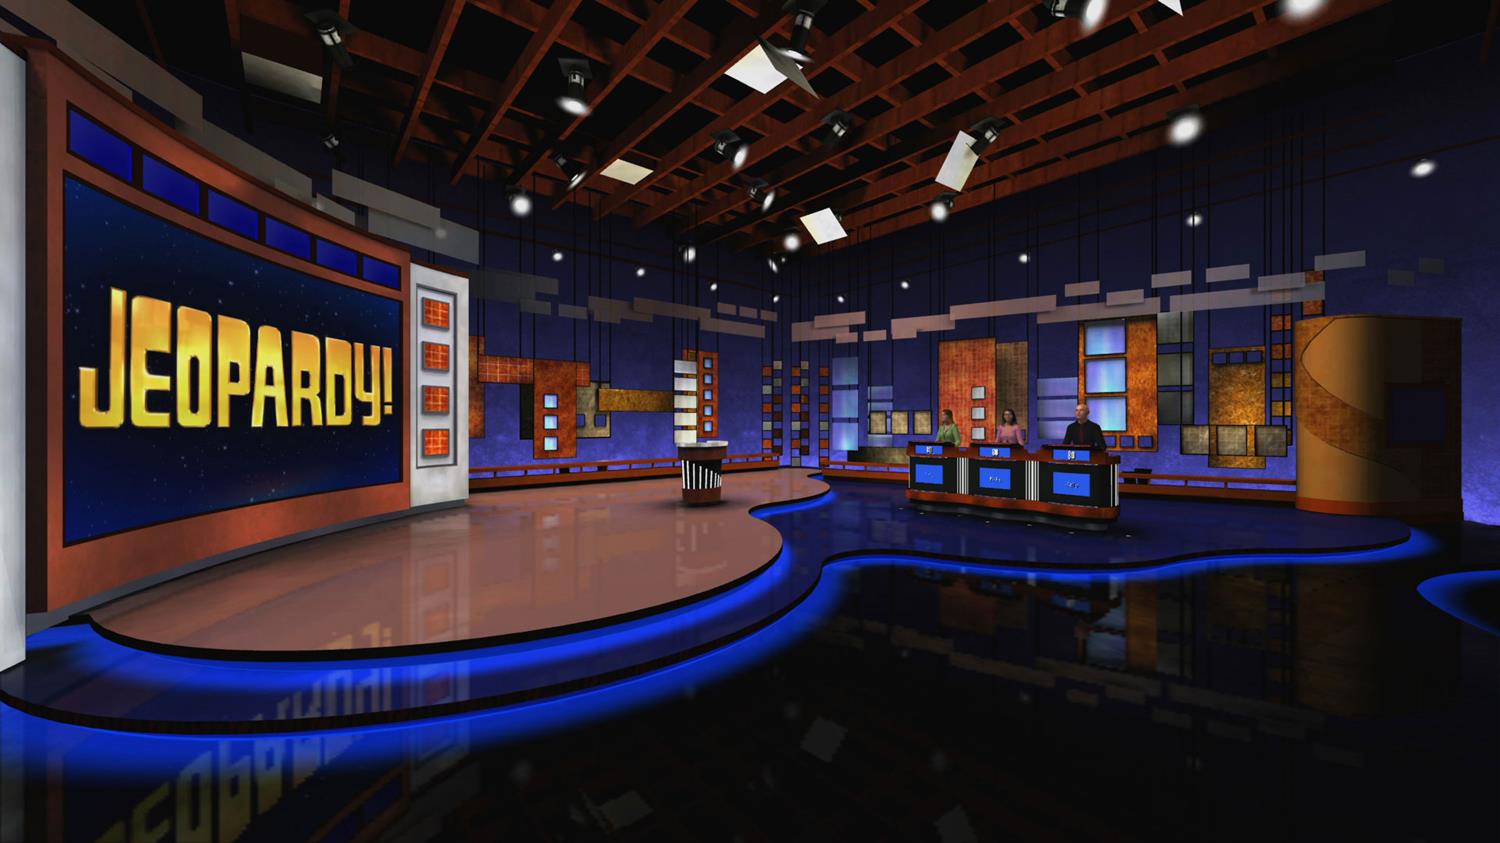 The Conservative Jon Stewart Jeopardy S Anniversary Ozy On Npr